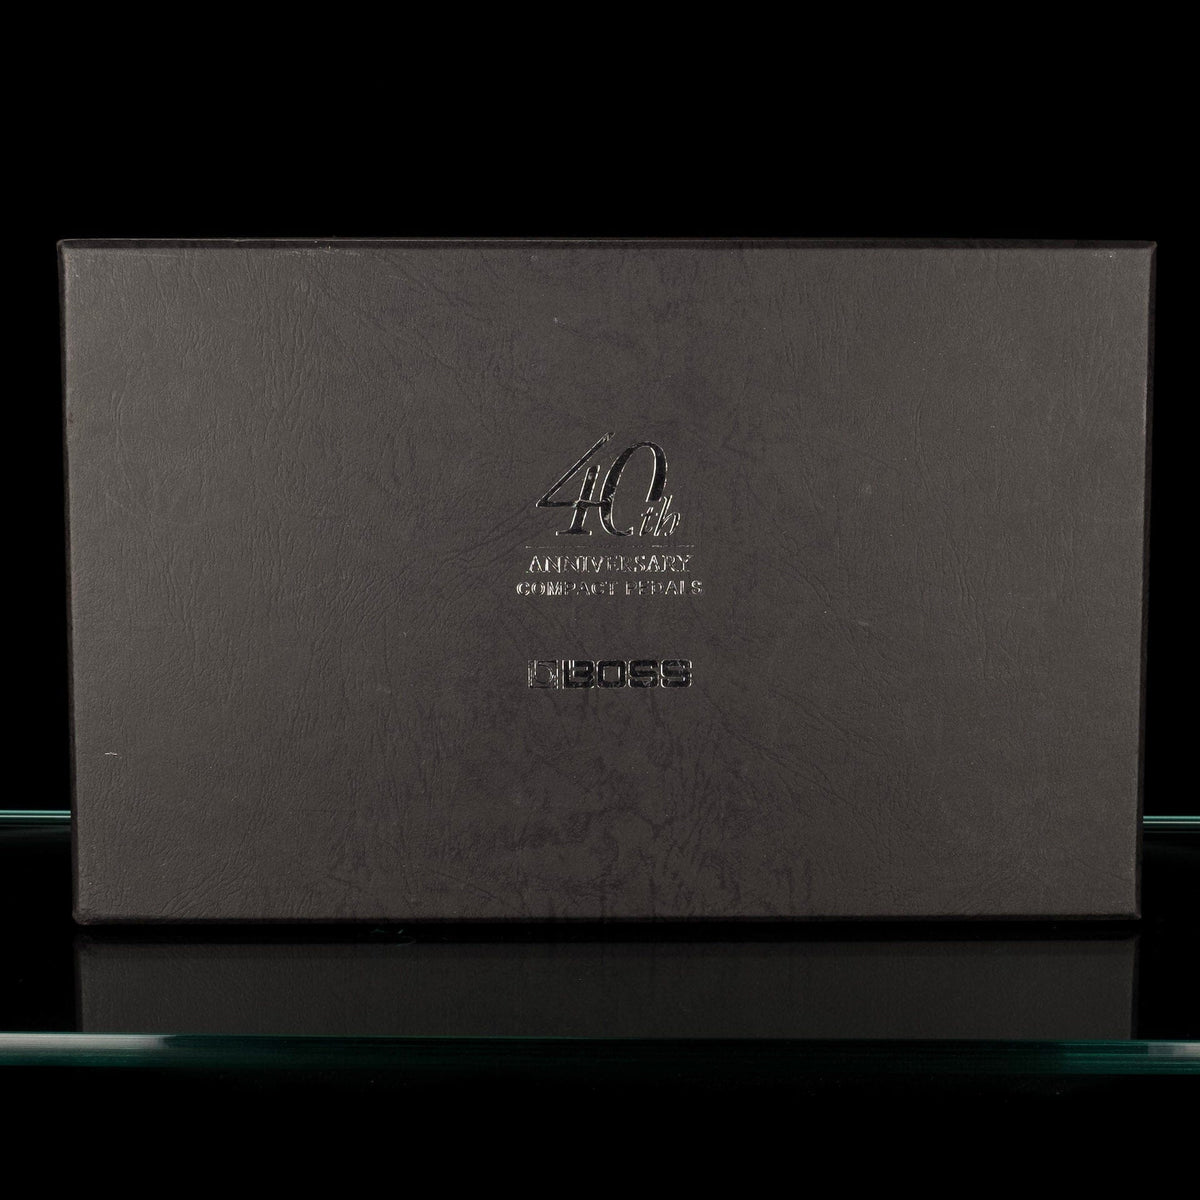 Boss BOX-40 Compact Pedal 40th Anniversary Box Set — Truetone Music